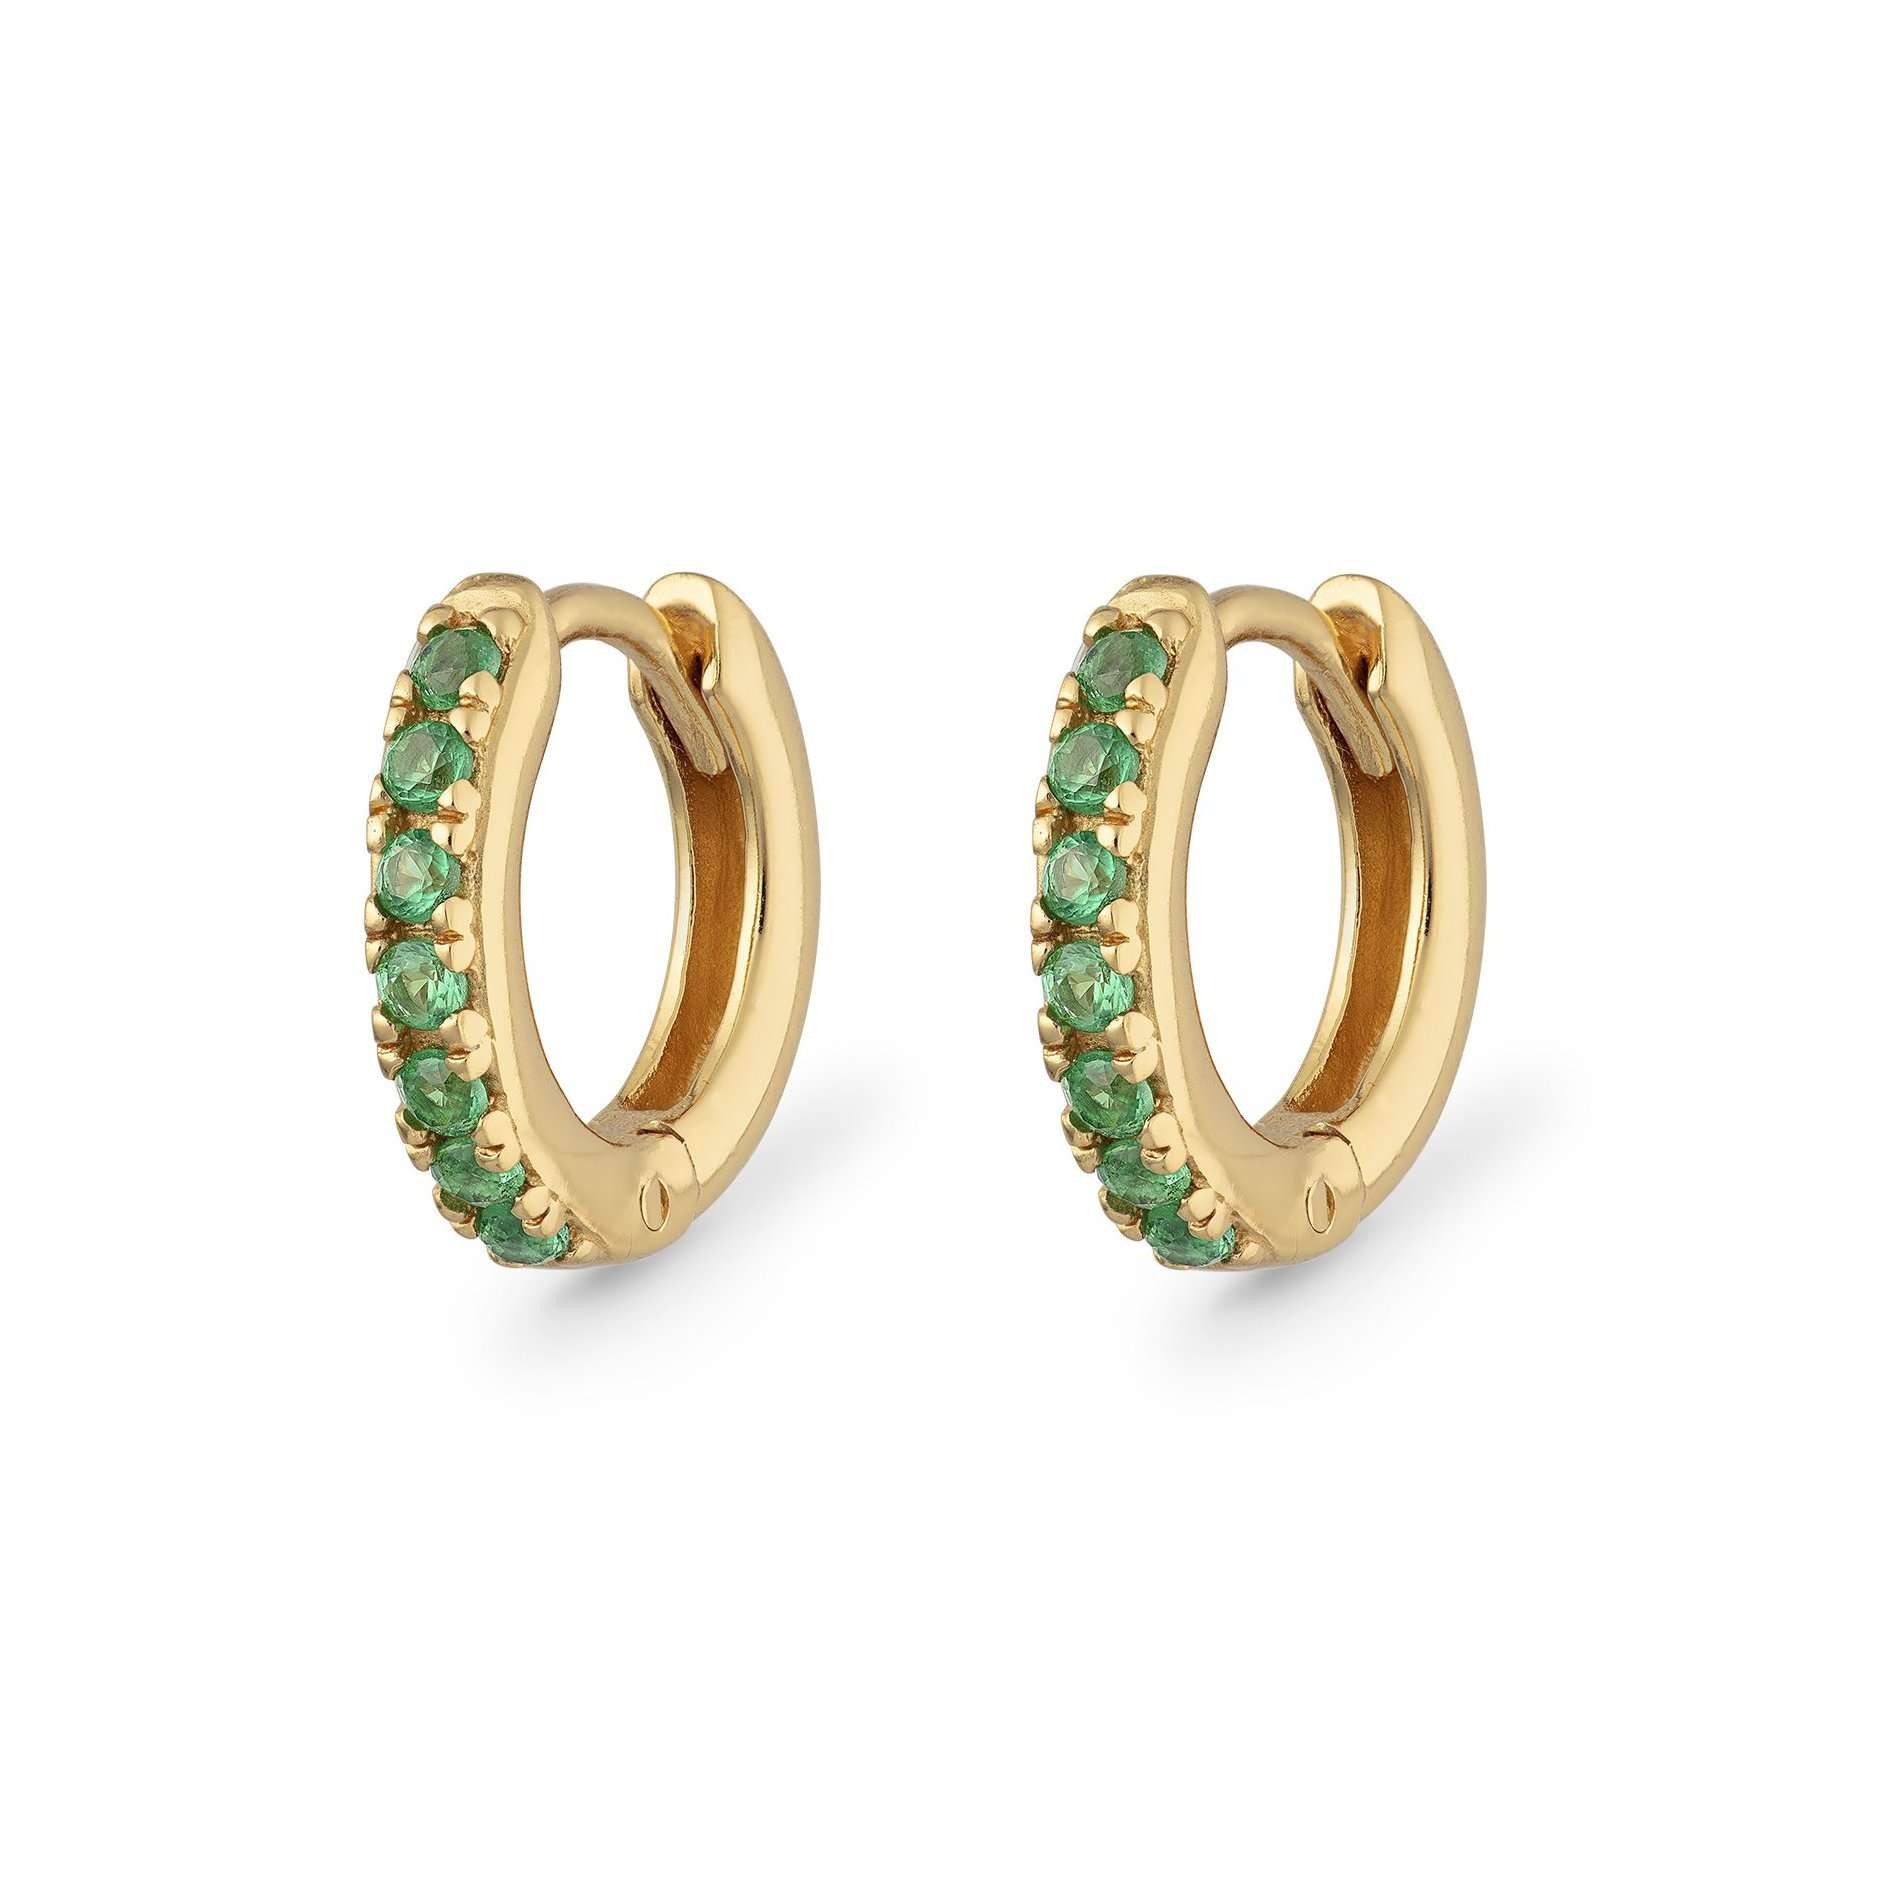 Huggie Earrings with Green Stones Gold Plated earrings by Scream Pretty